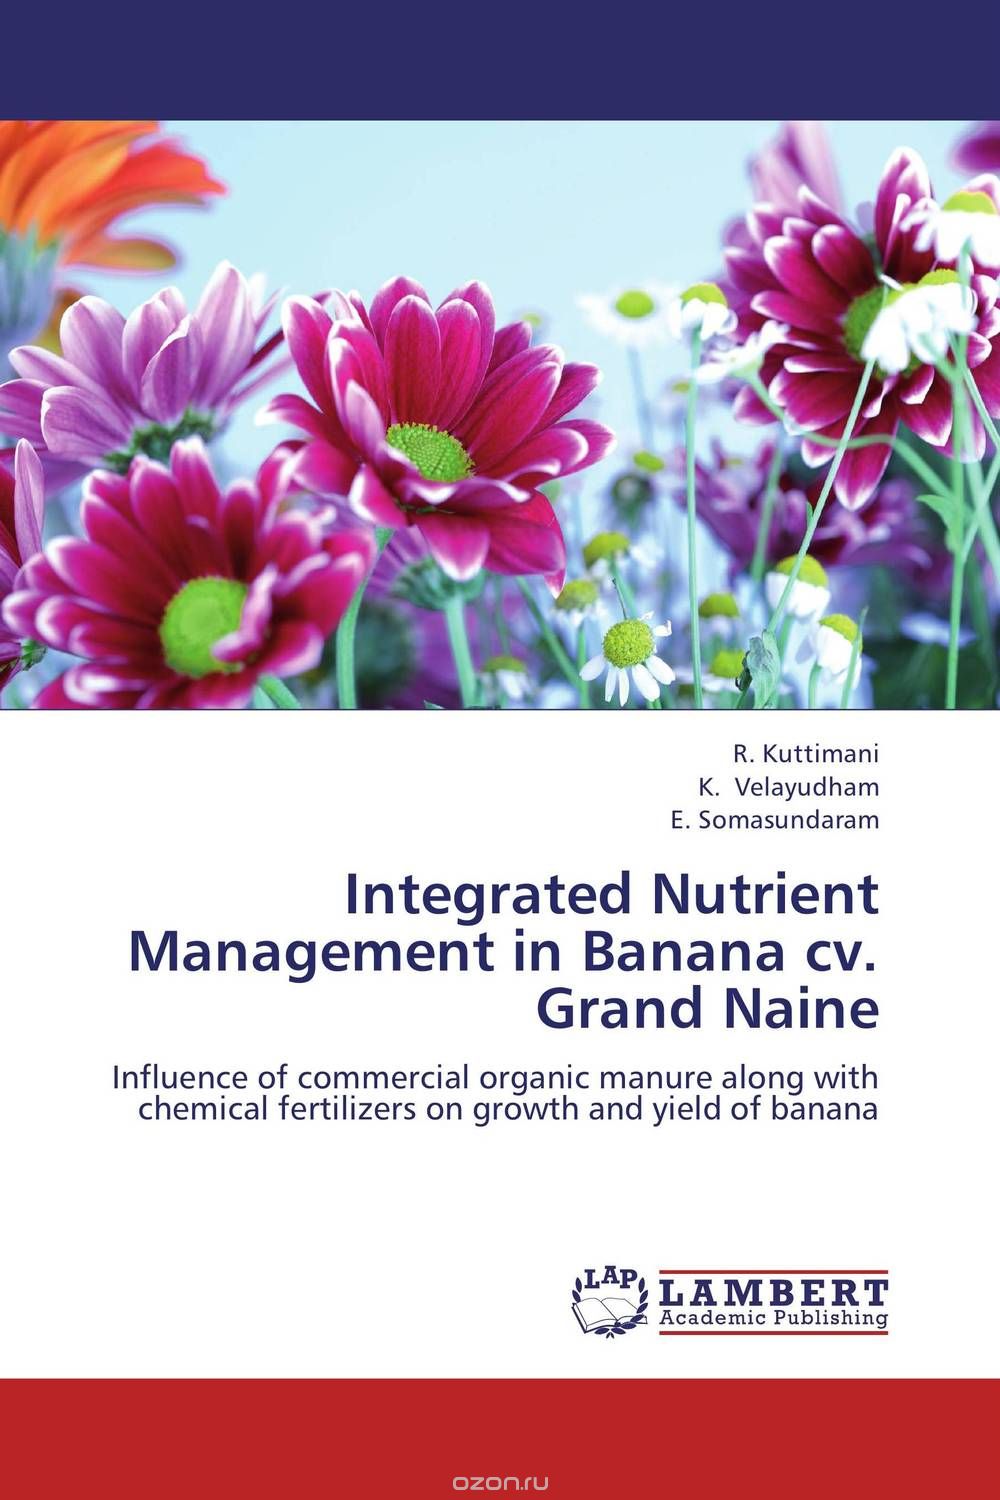 Скачать книгу "Integrated Nutrient Management in Banana cv. Grand Naine"